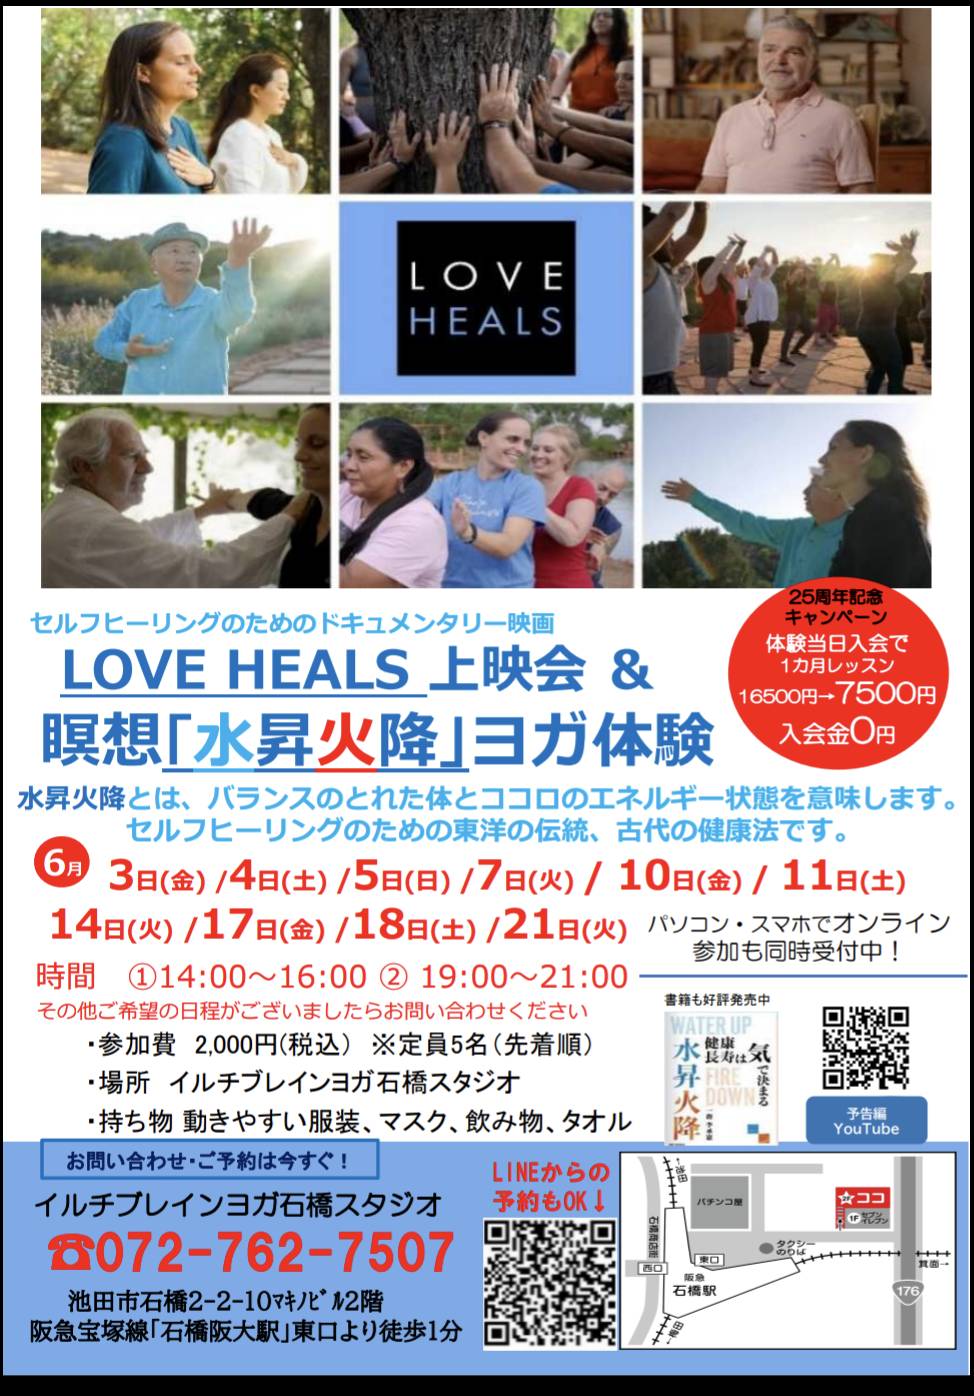 「LOVE HEALS」映画上映会&瞑想体験ワークショップのお知らせ💕